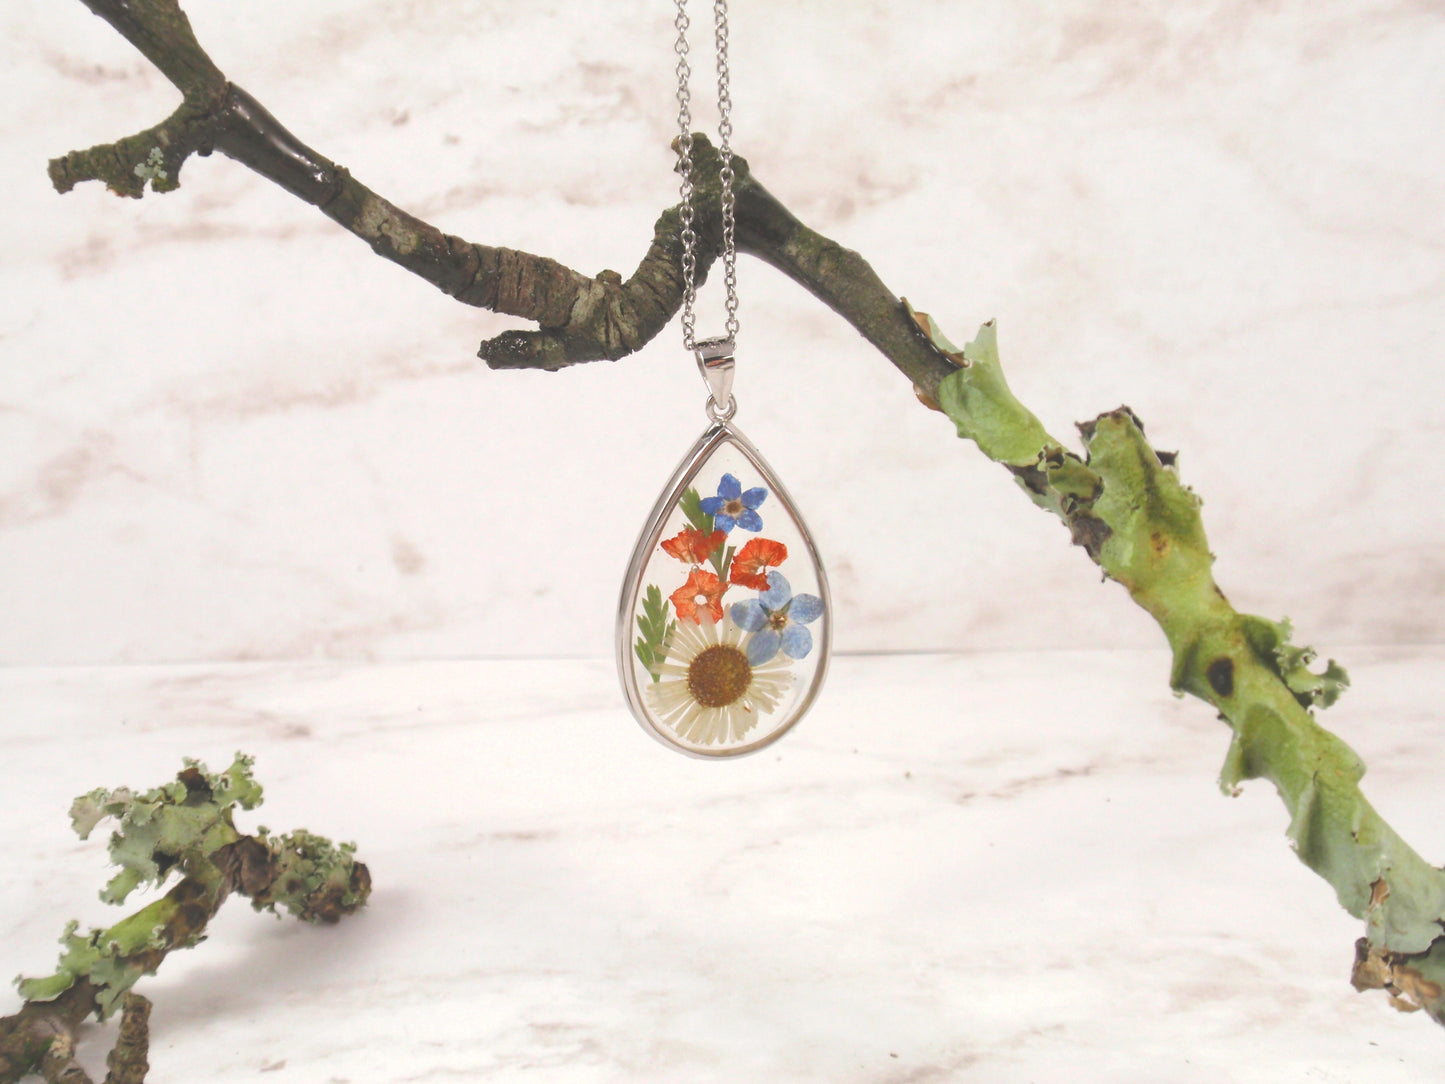 Pressed flowers necklace teardrop pendant